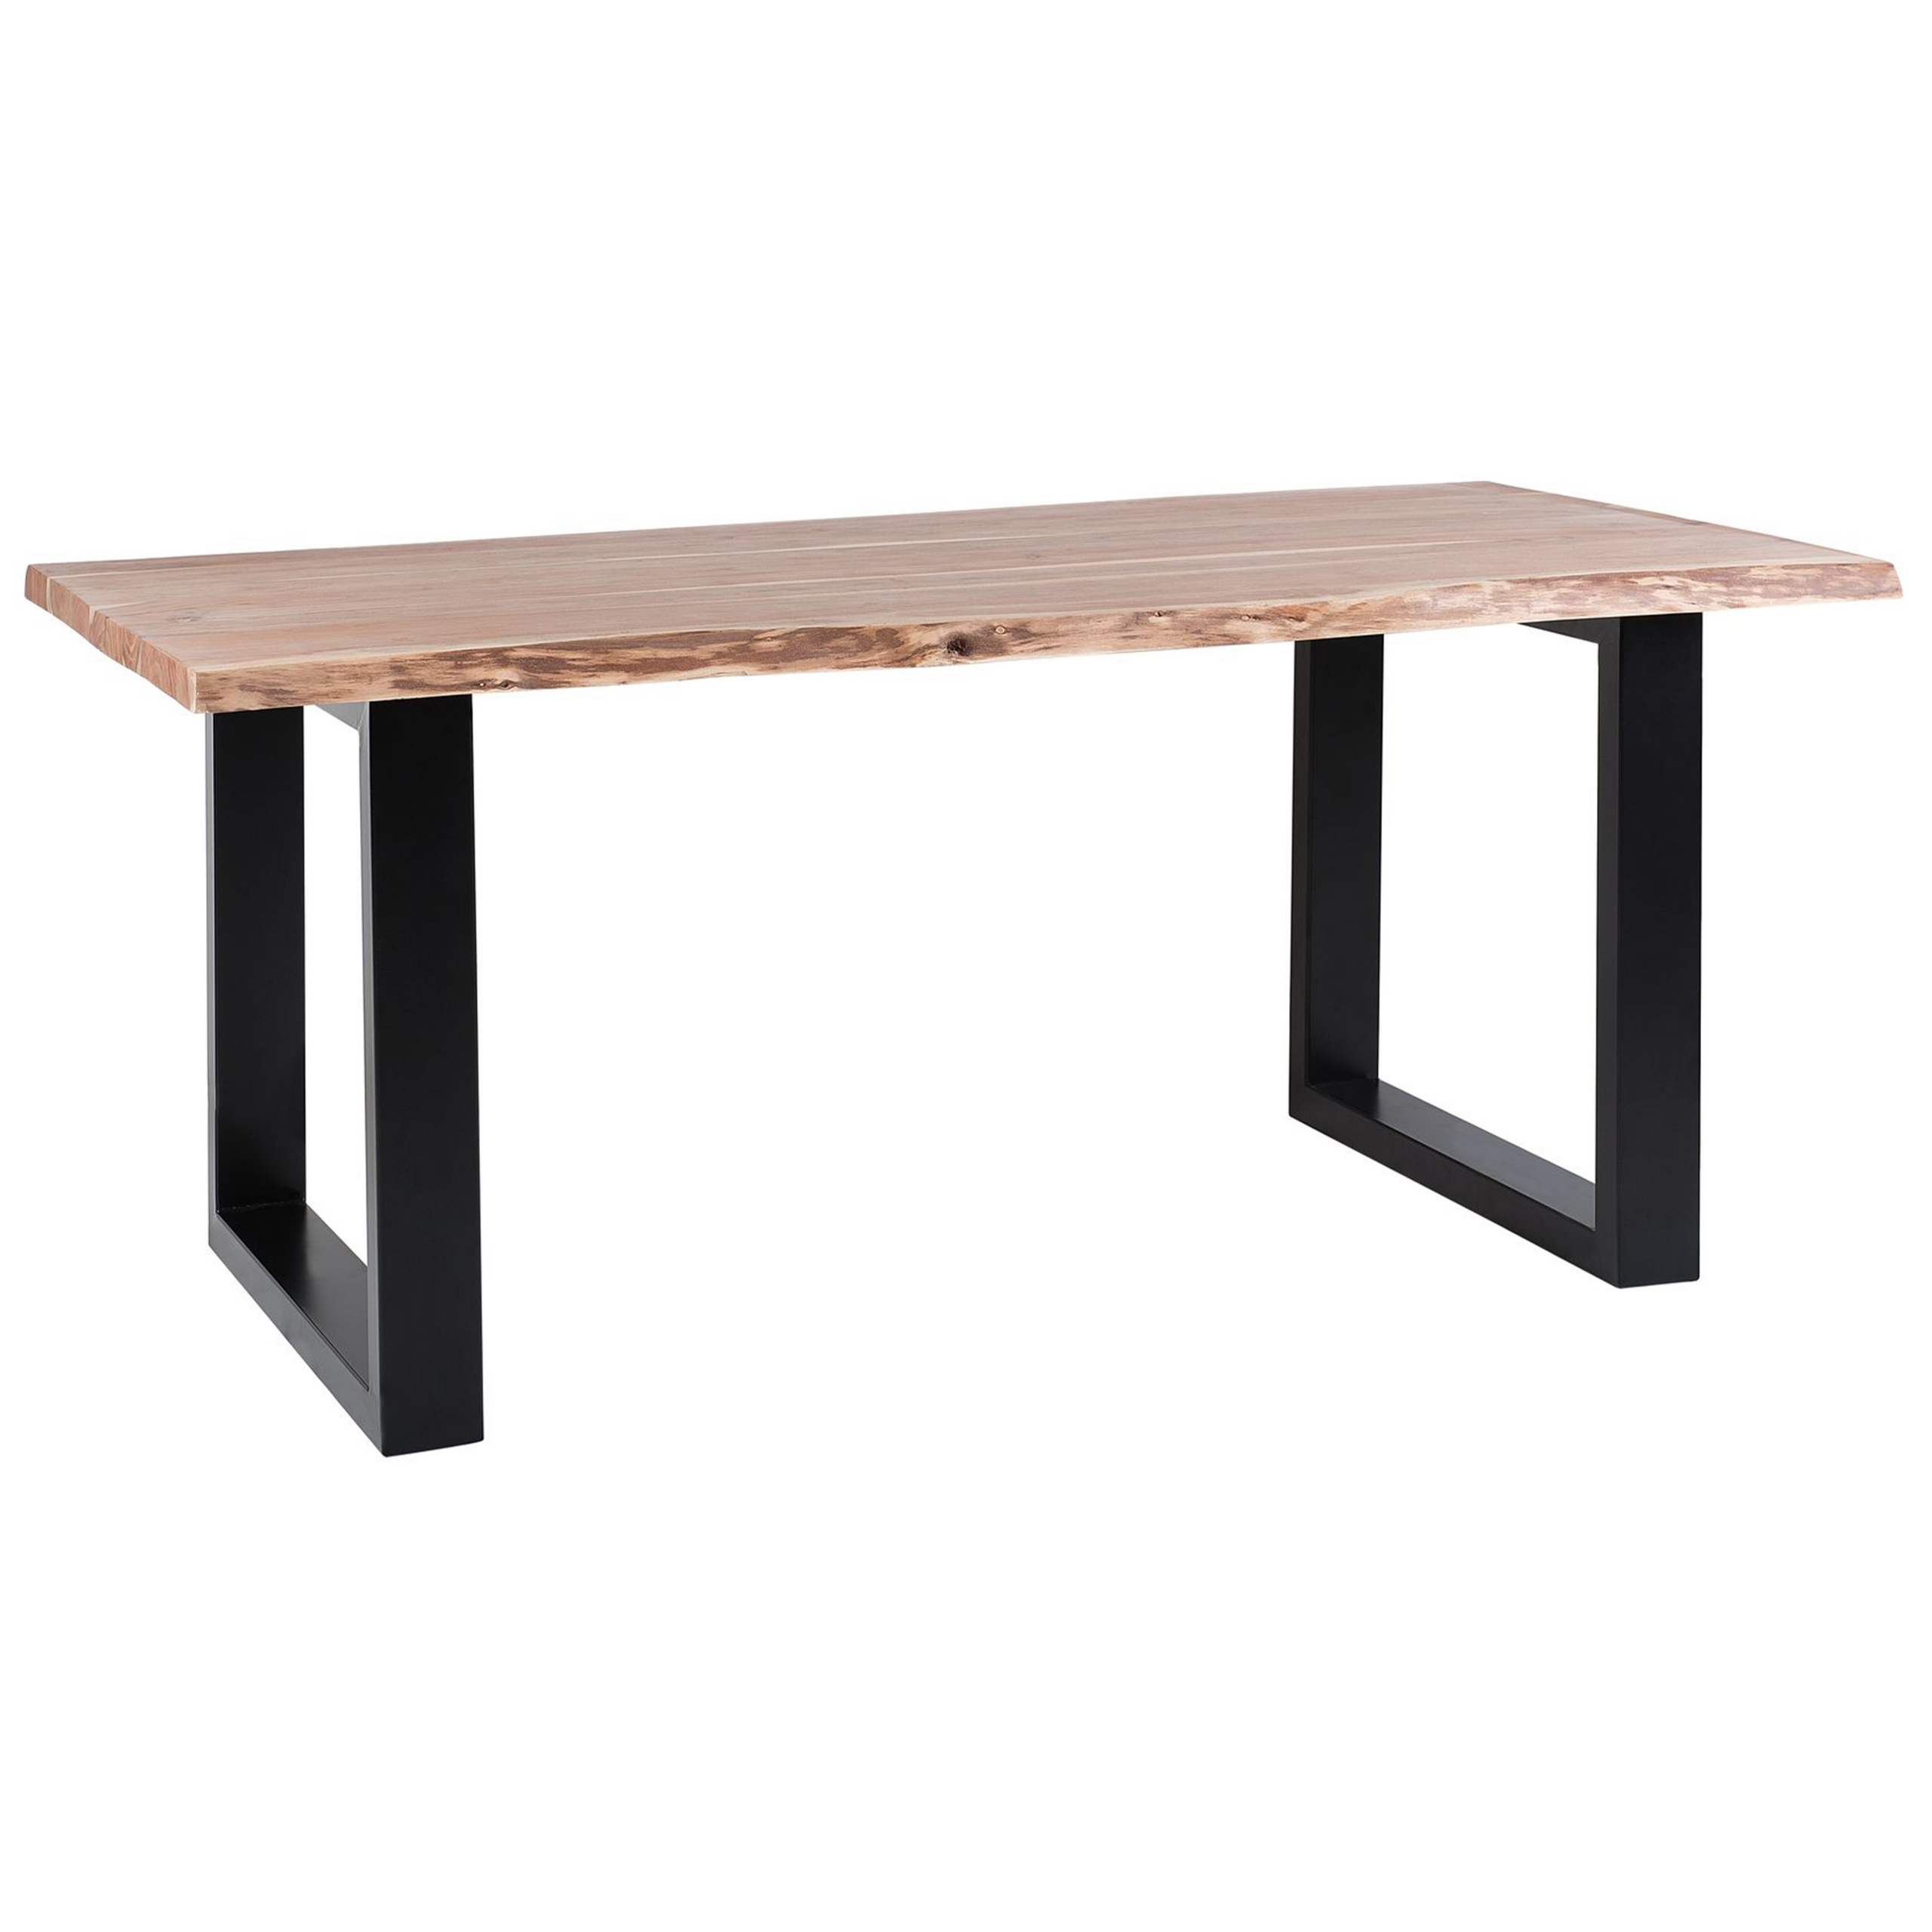 Beliani Dining Table Light Wood 200 x 95 cm Solid Wood Top Live Edge Black Metal Base Modern Industrial